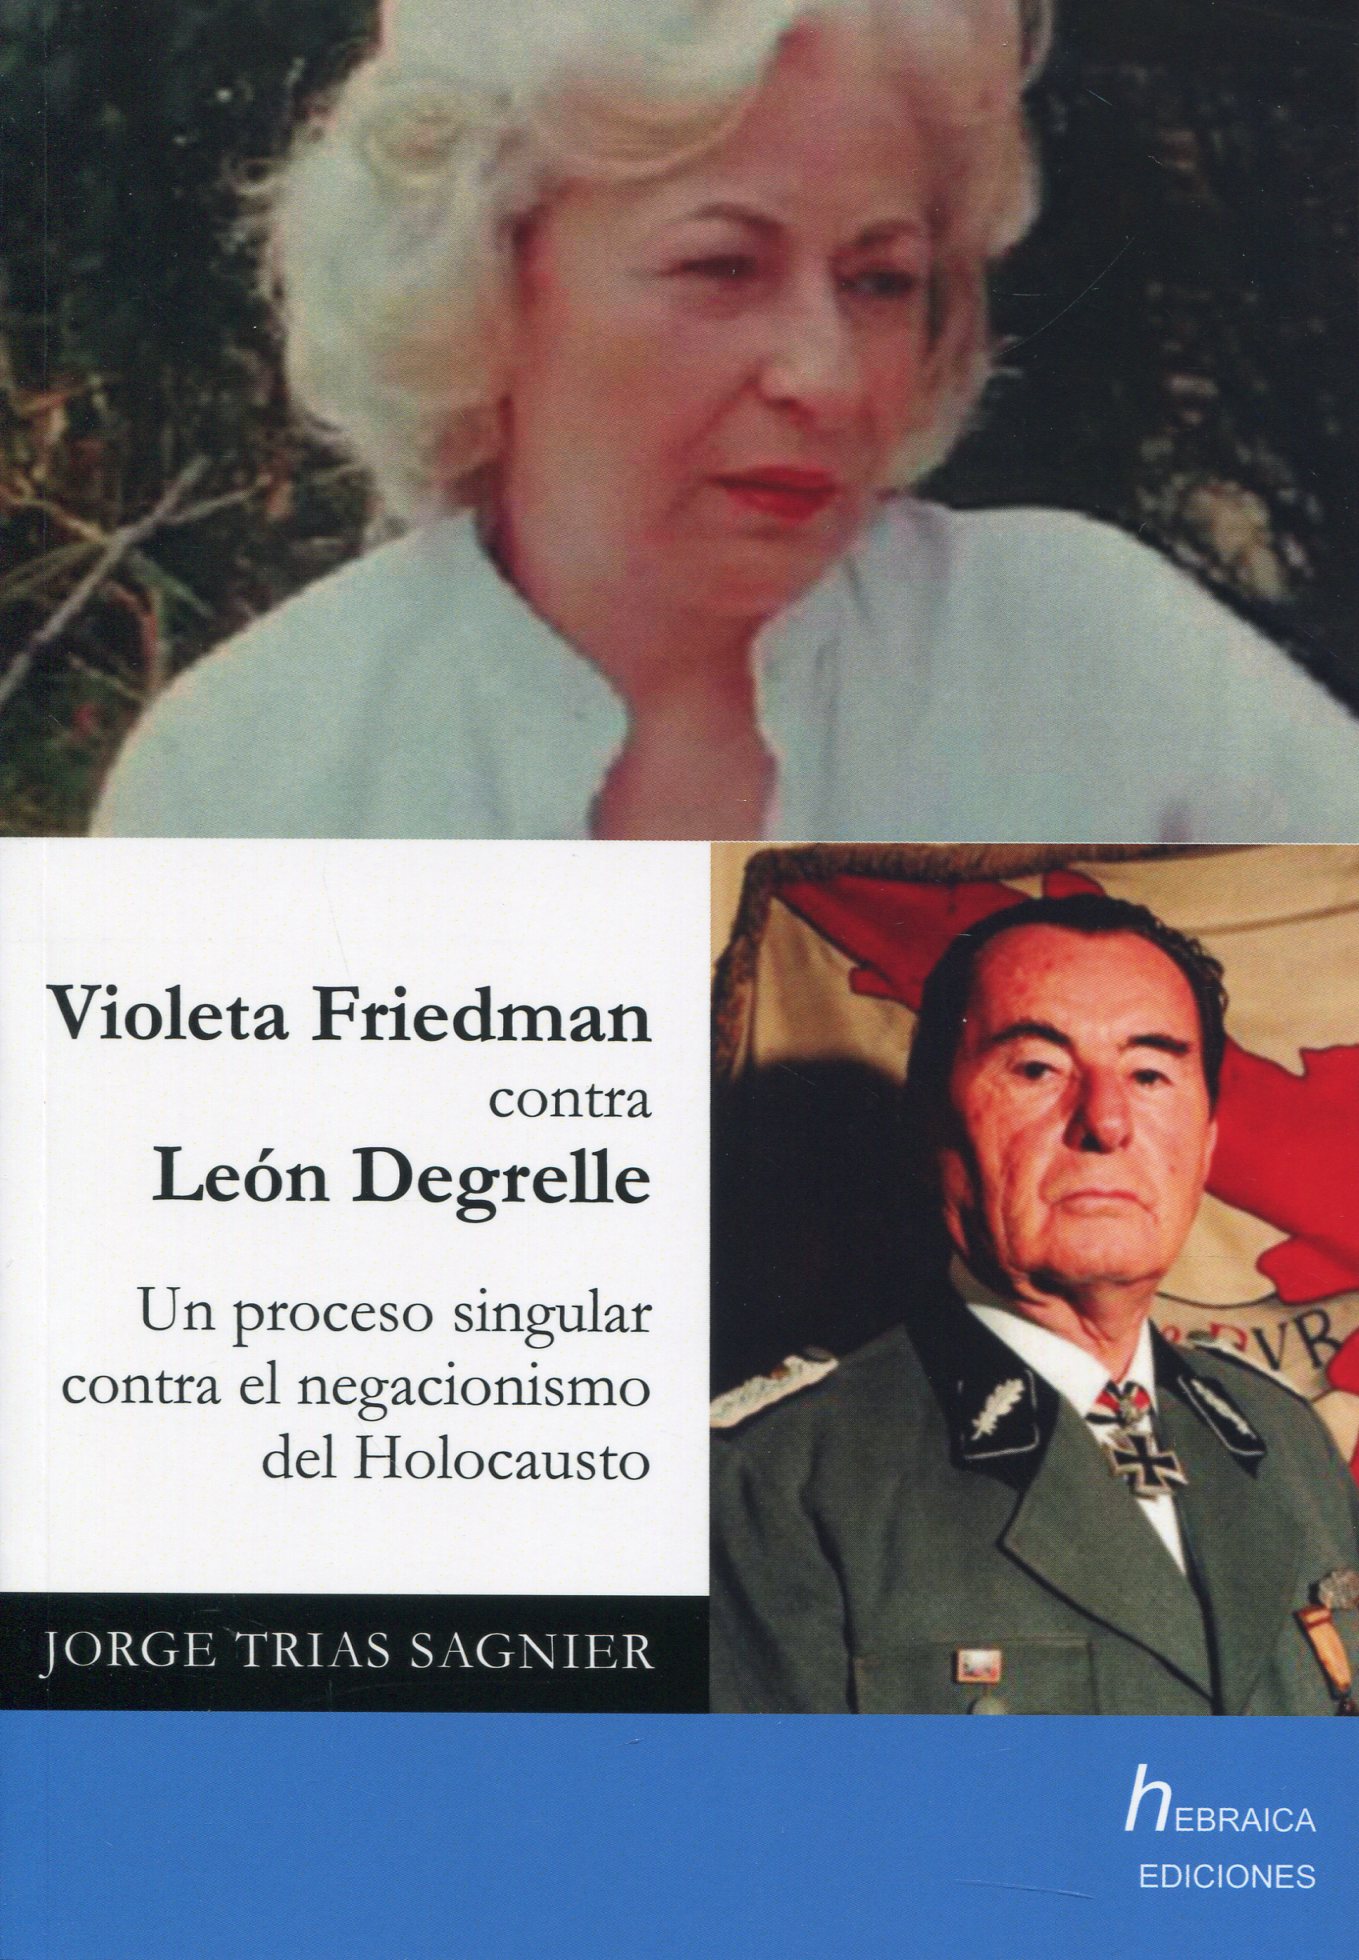 Violeta Friedman contra León Degrelle